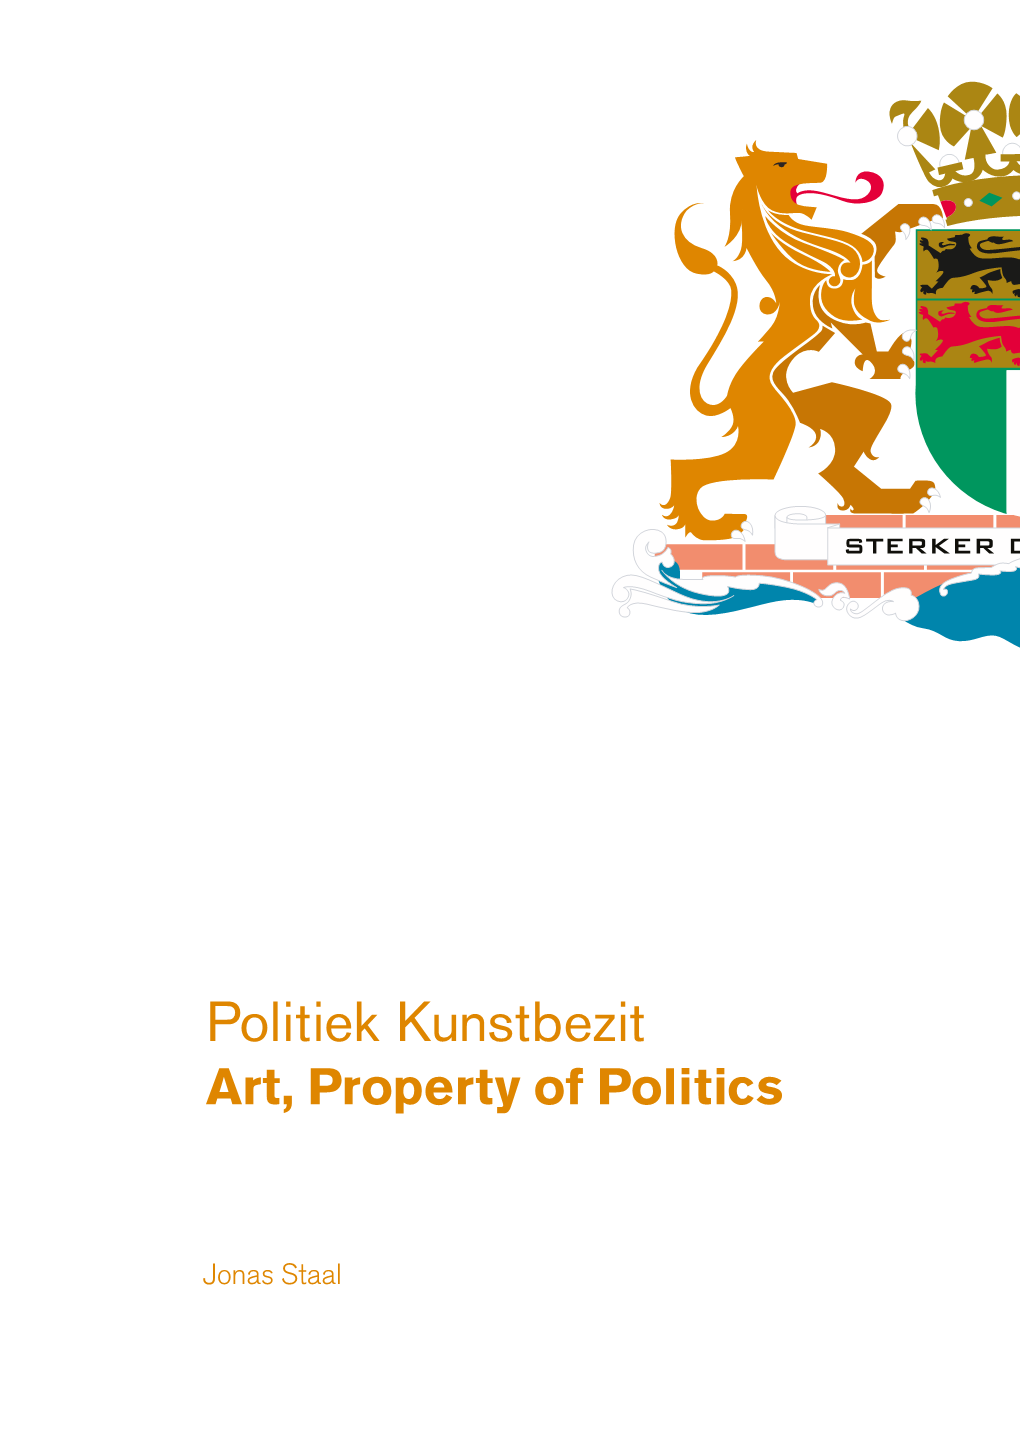 Politiek Kunstbezit Art, Property of Politics